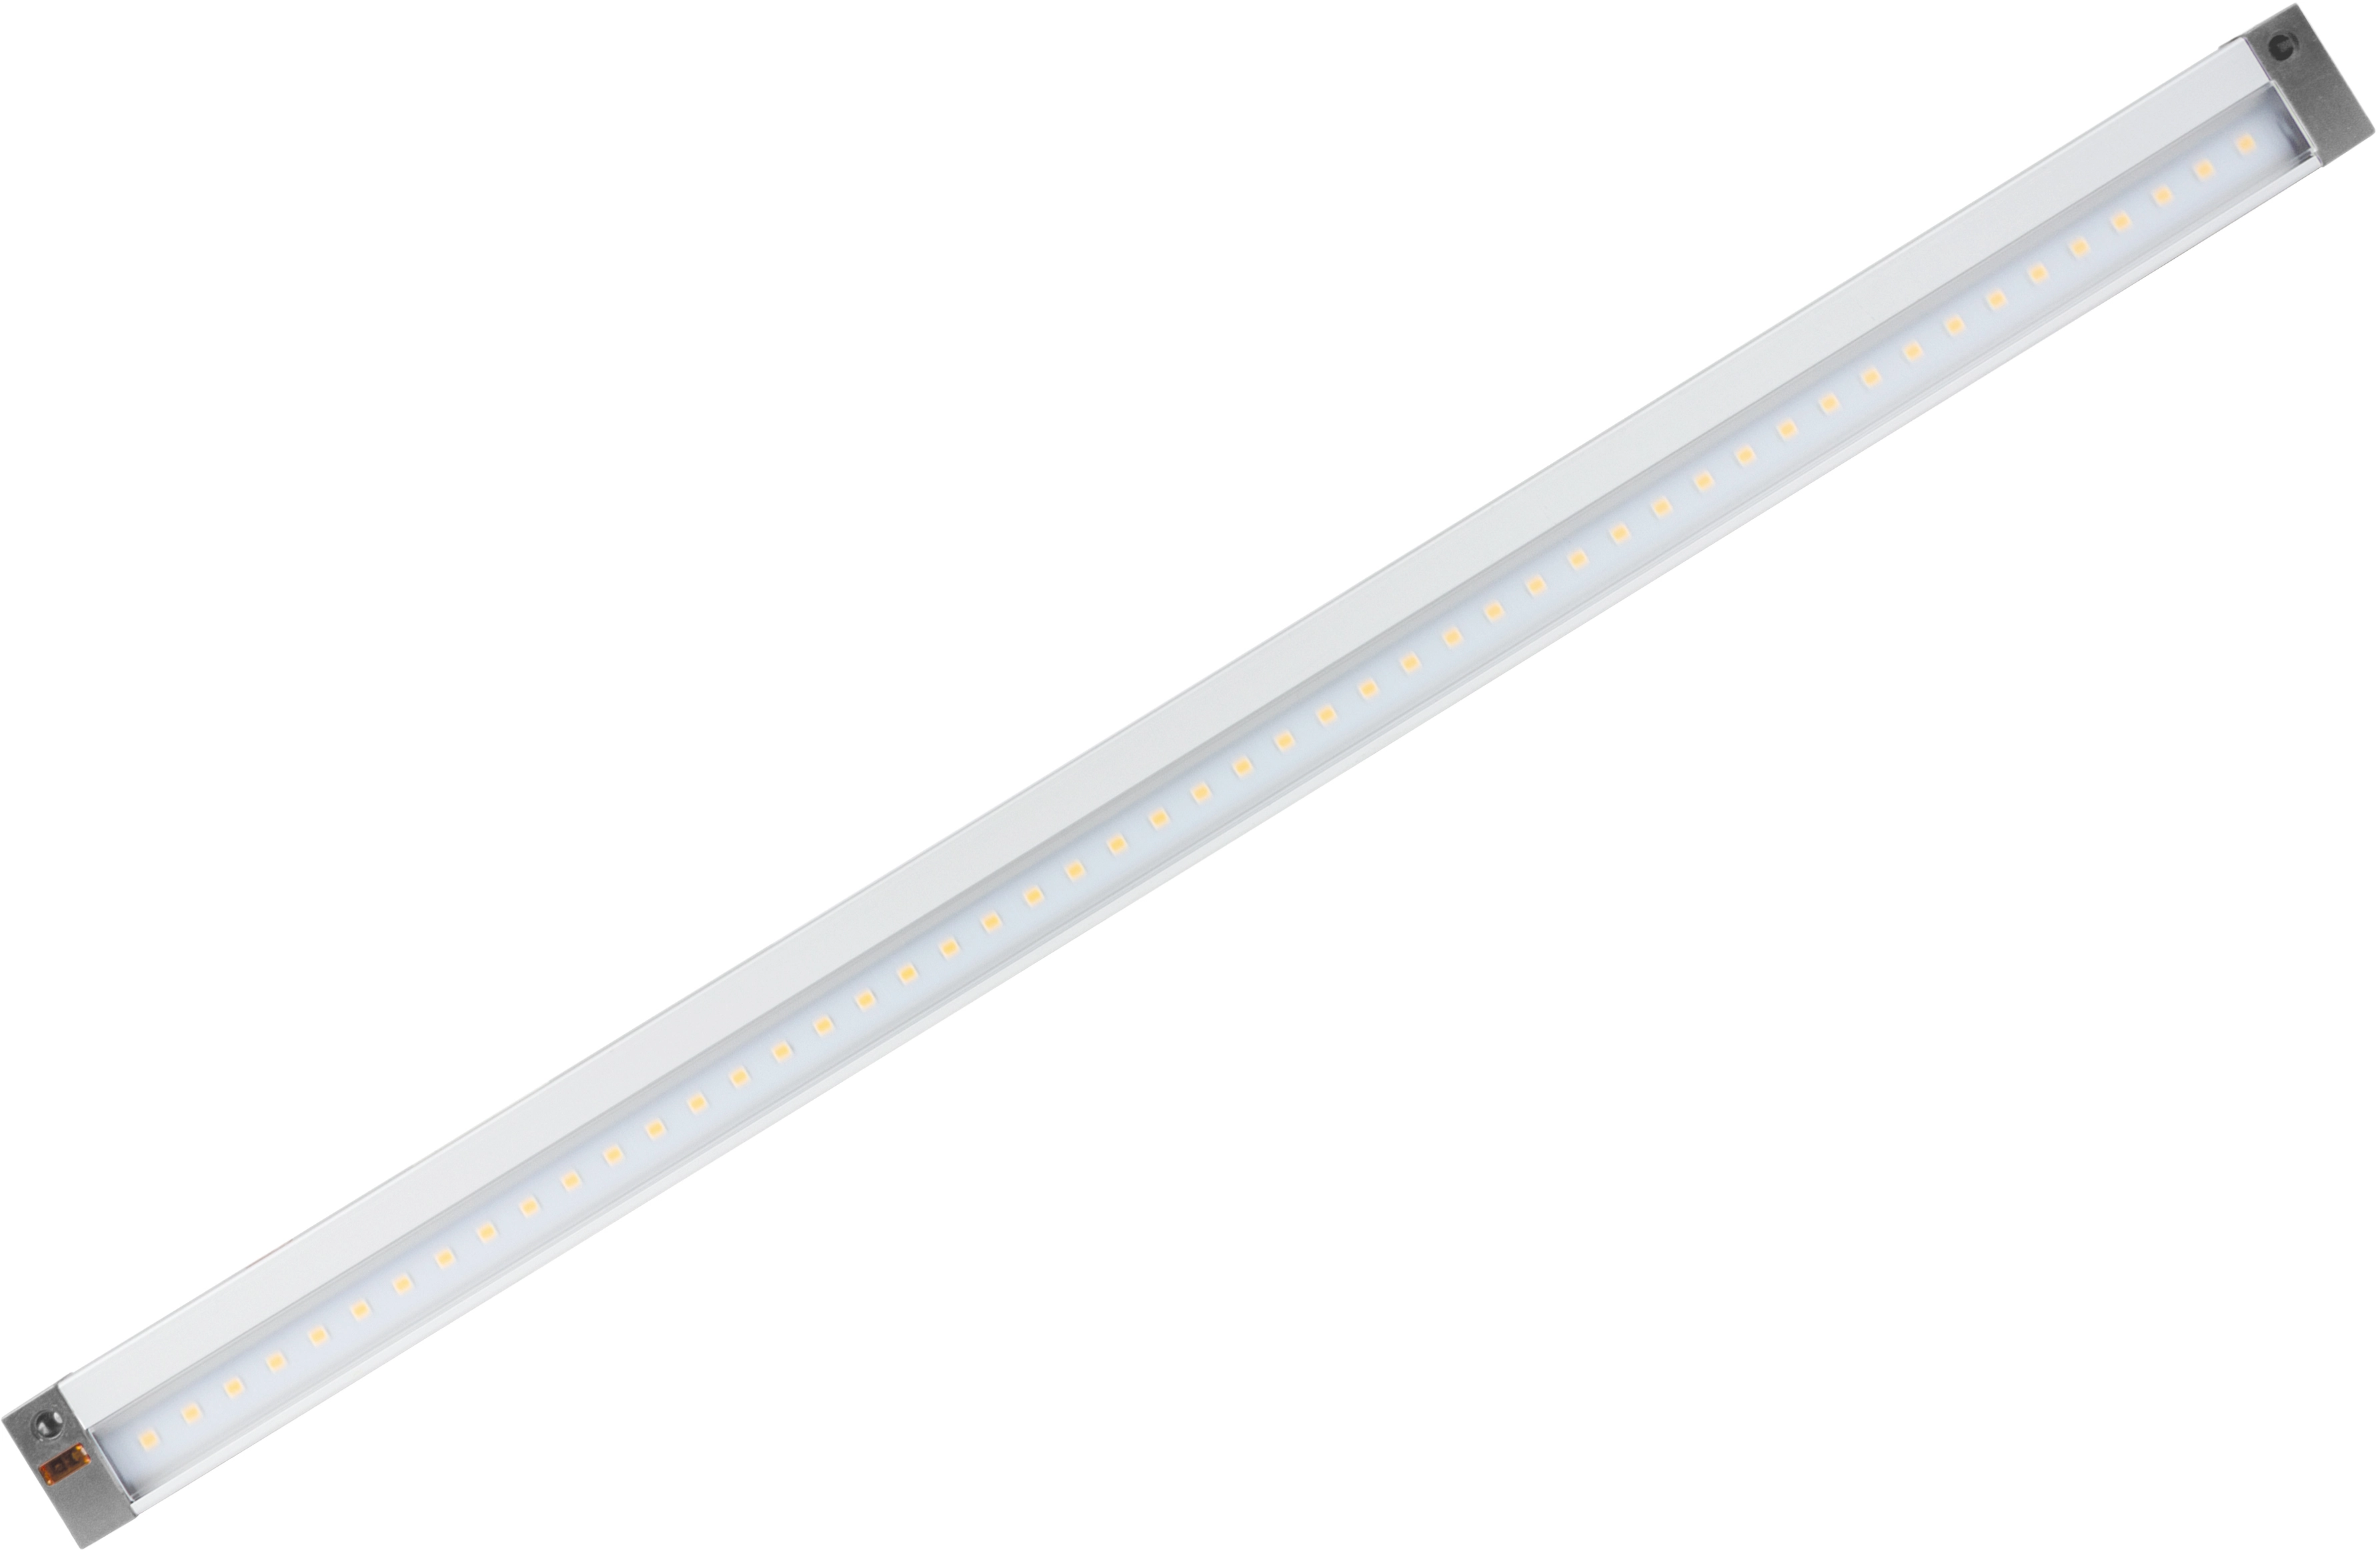 REV Ritter LED-Unterbauleuchte SensoTwin 60 cm 600lm 3000K Sensor Dimmbar  Silber kaufen bei OBI